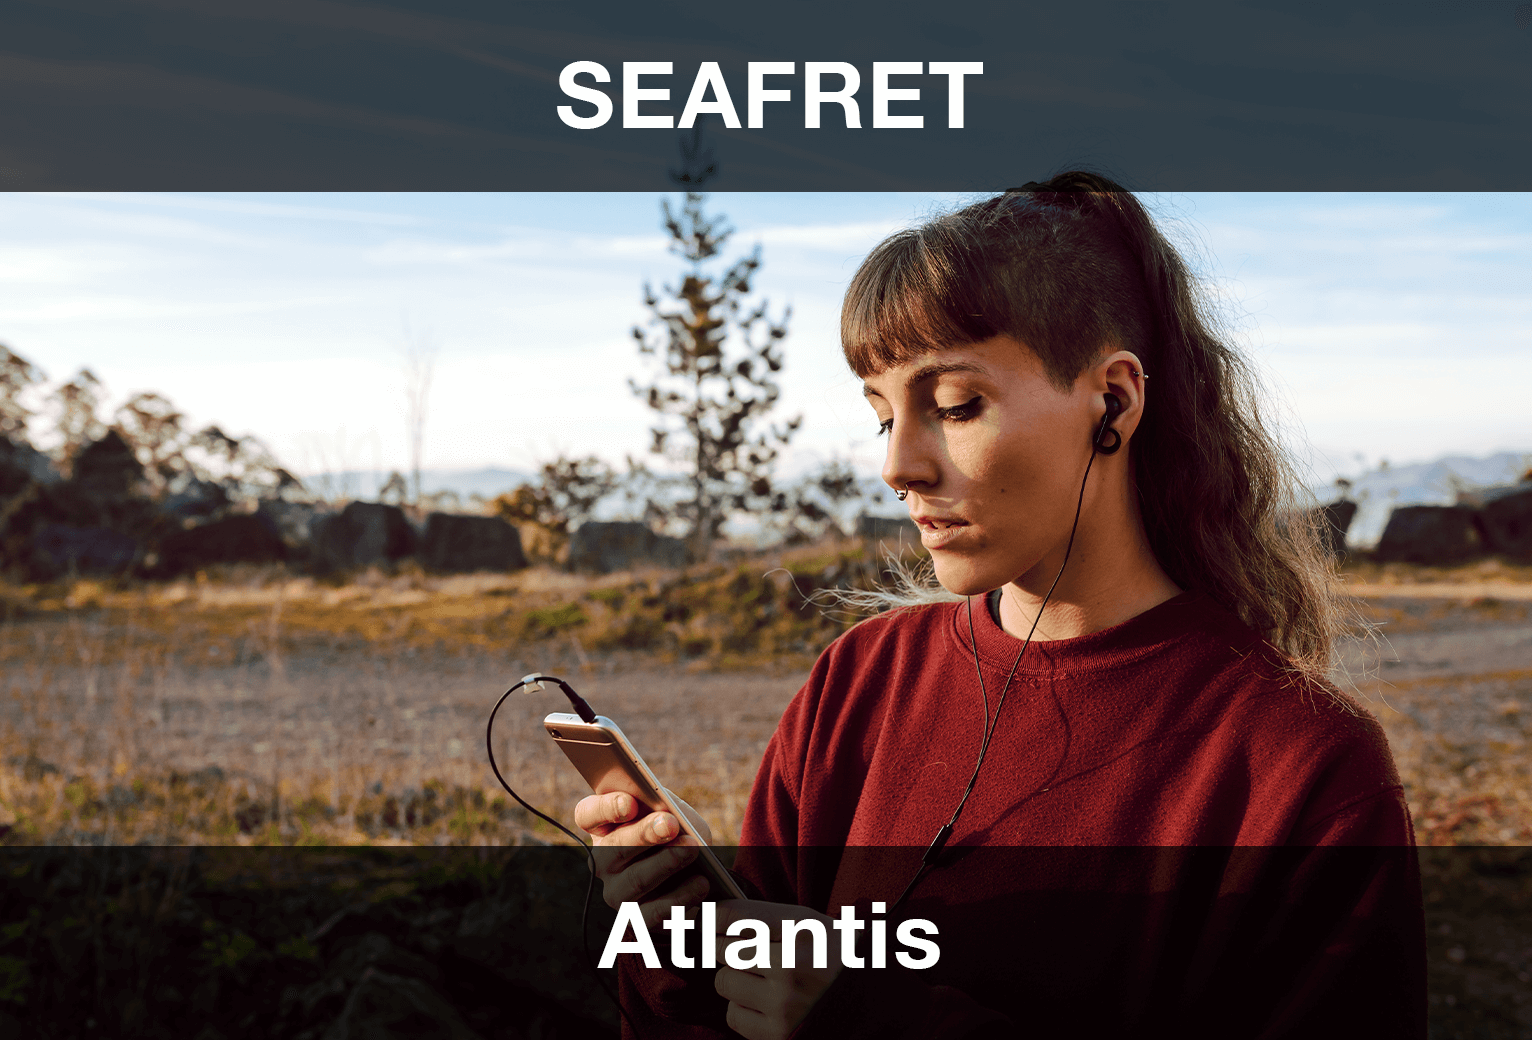 Seafret atlantis. Be there Seafret.